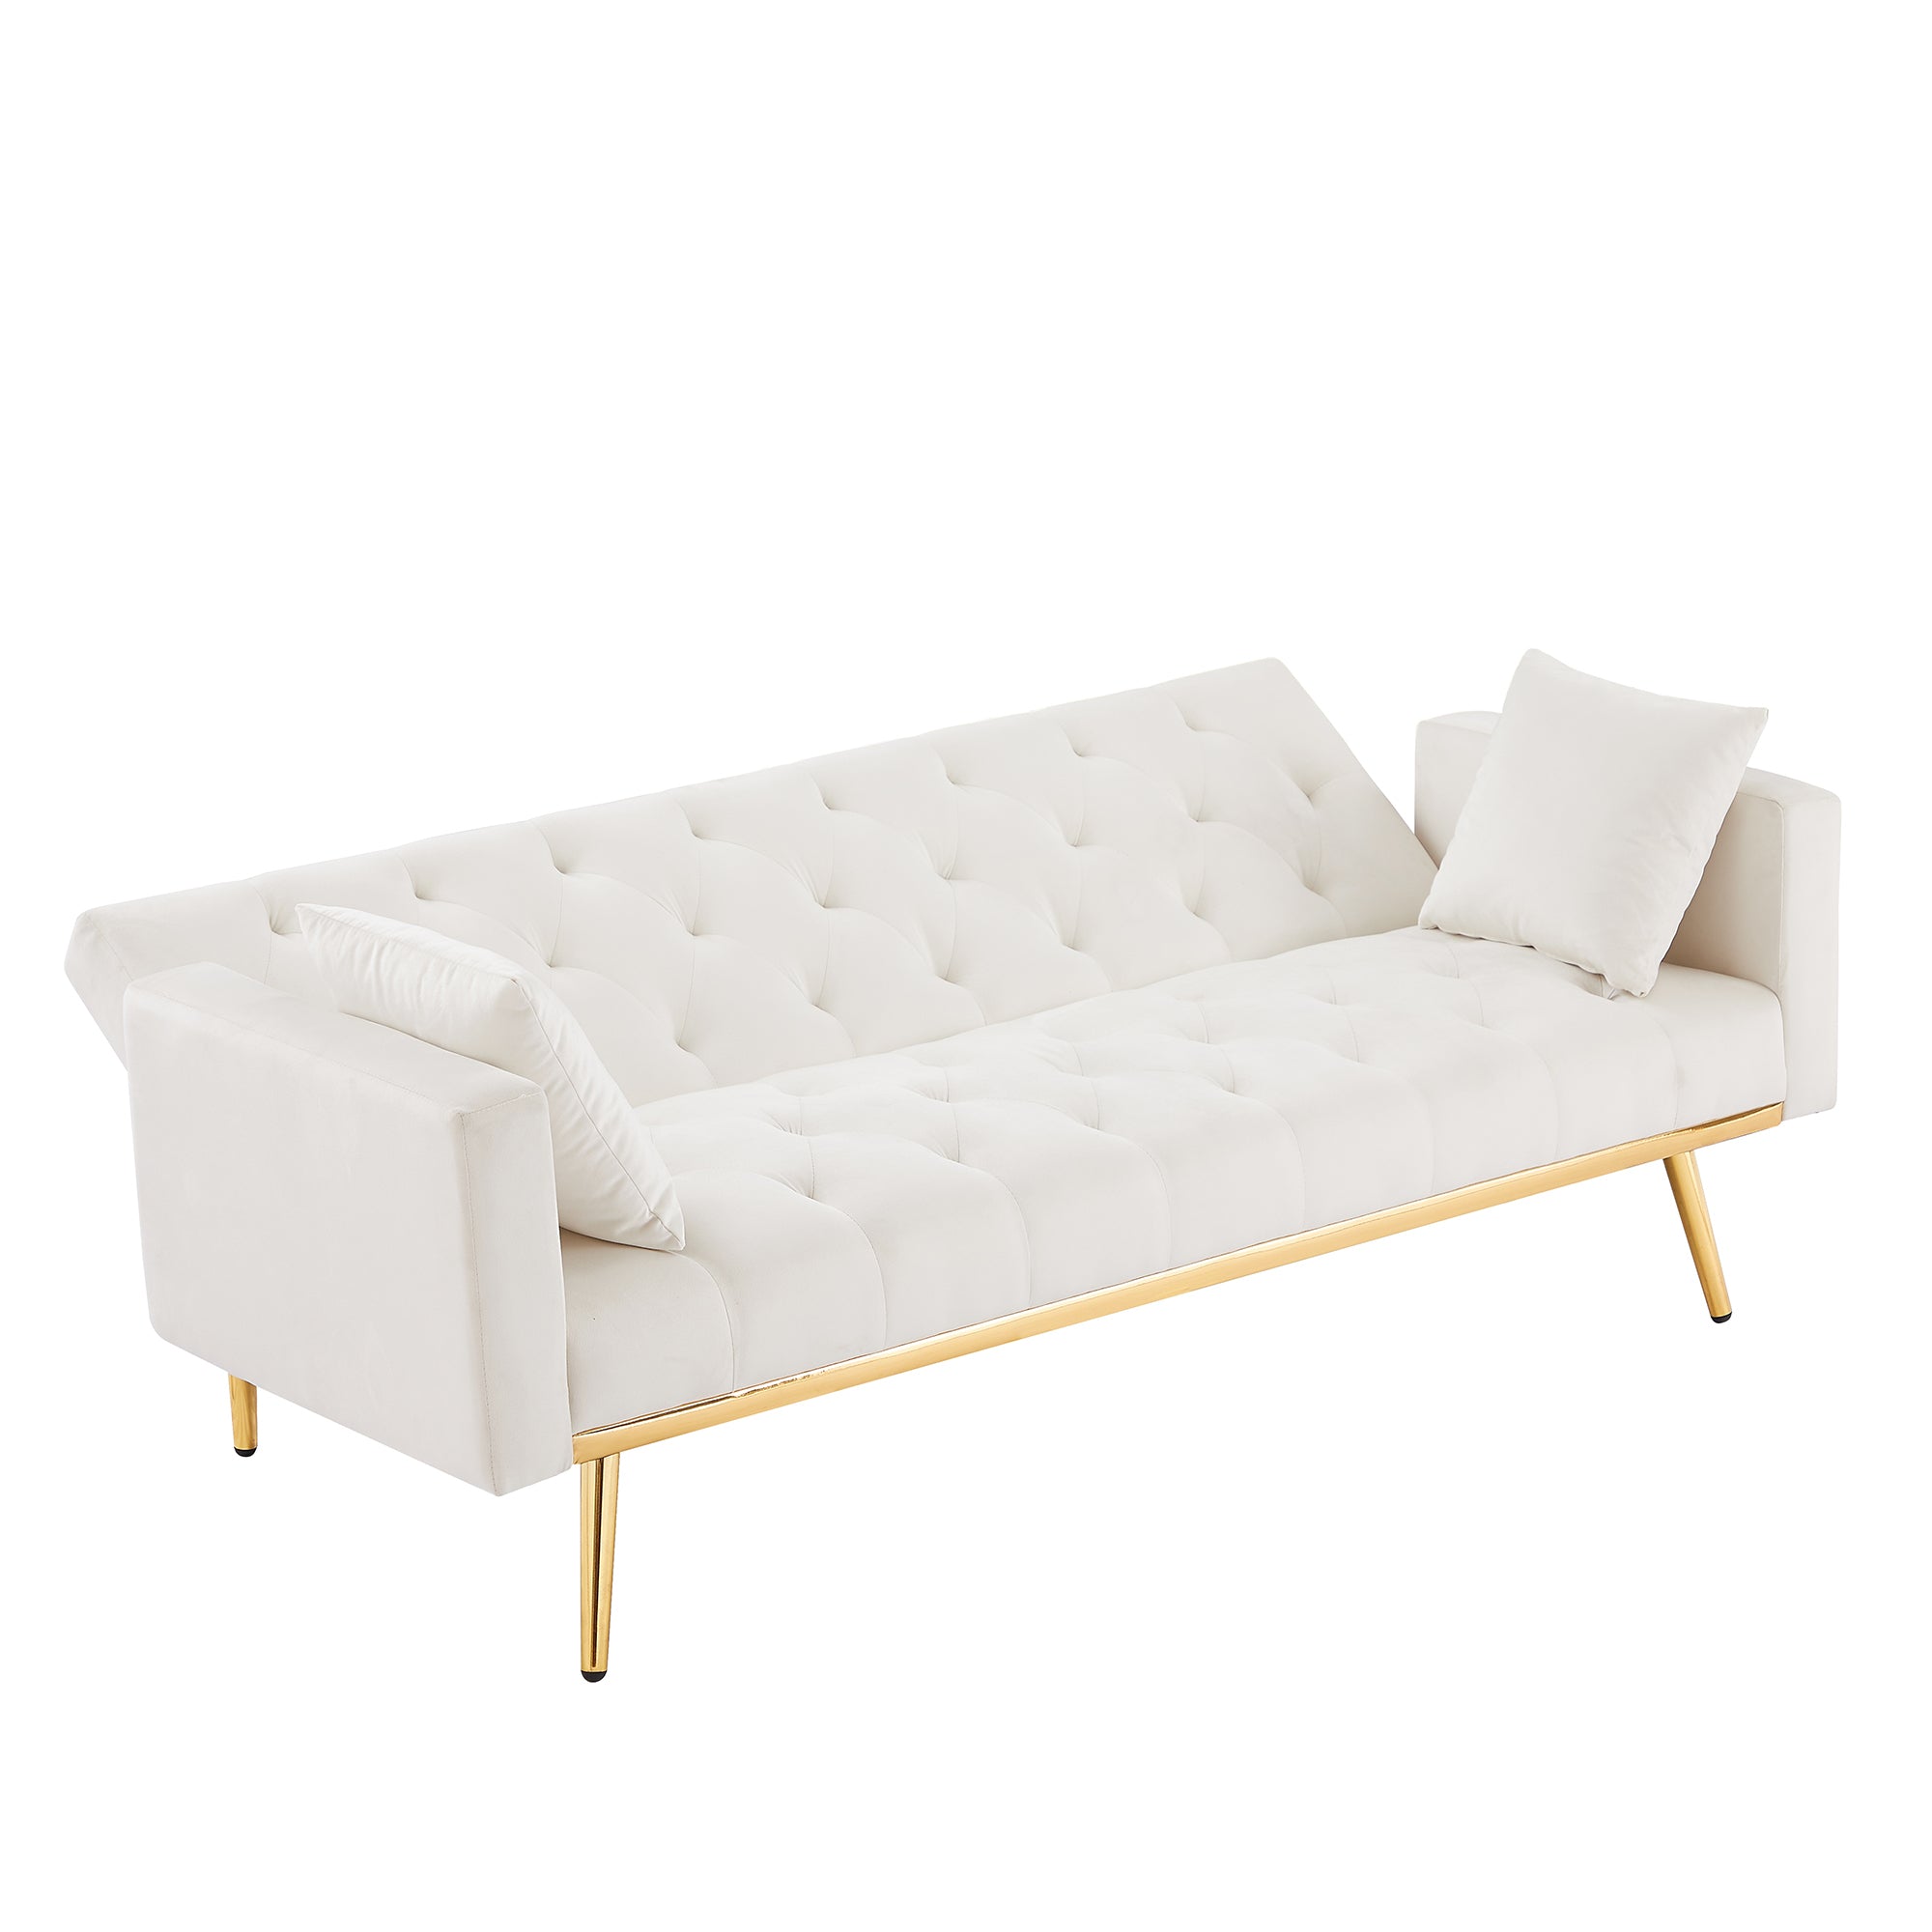 Convertible Folding Futon Sofa Bed (White)